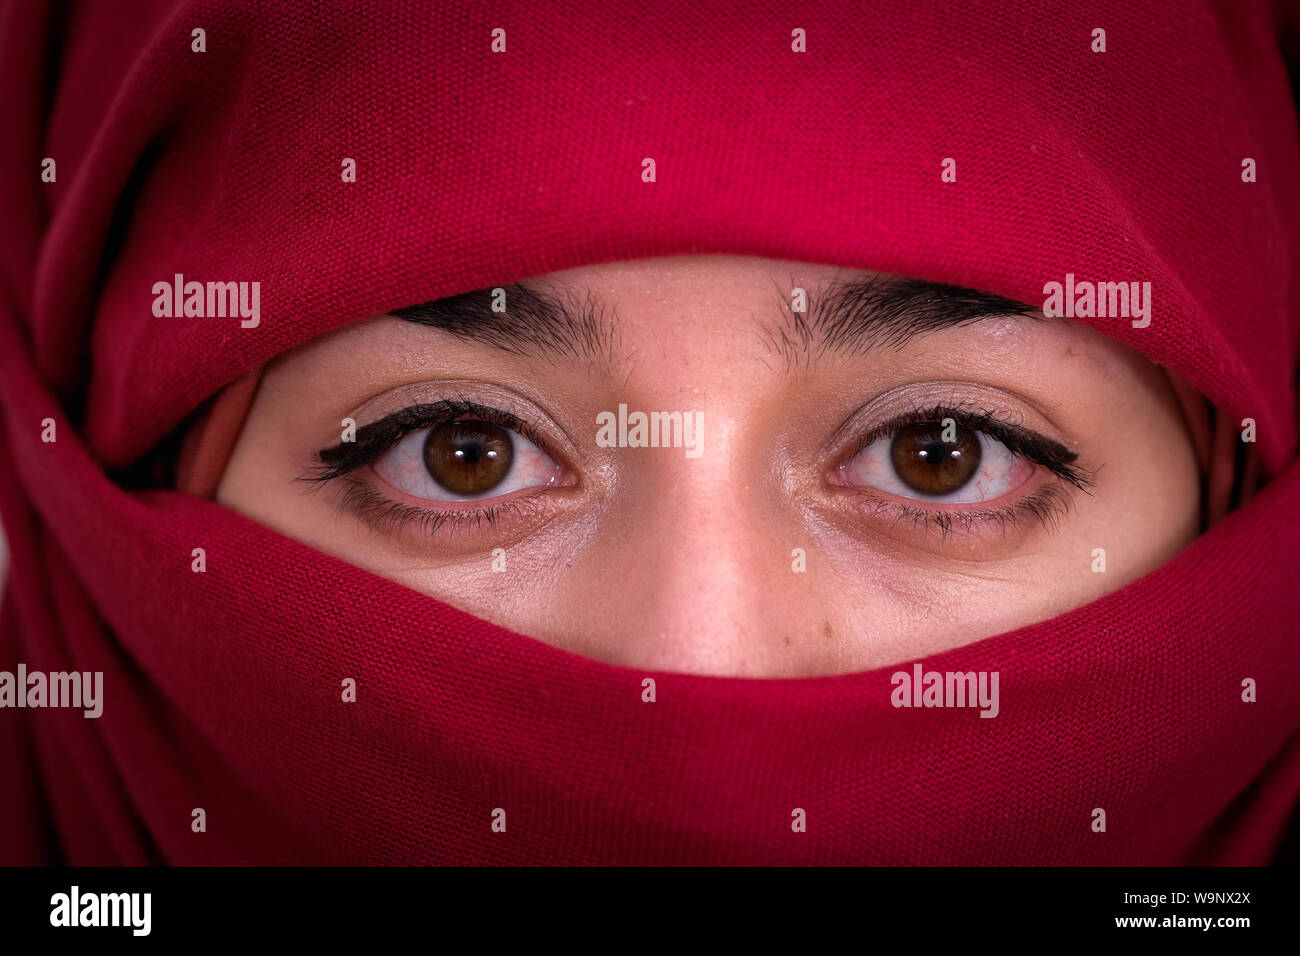 Muslim woman wearing red hijab veil, Afghan girl wear the burka or burqa, close up portrait photo Stock Photo